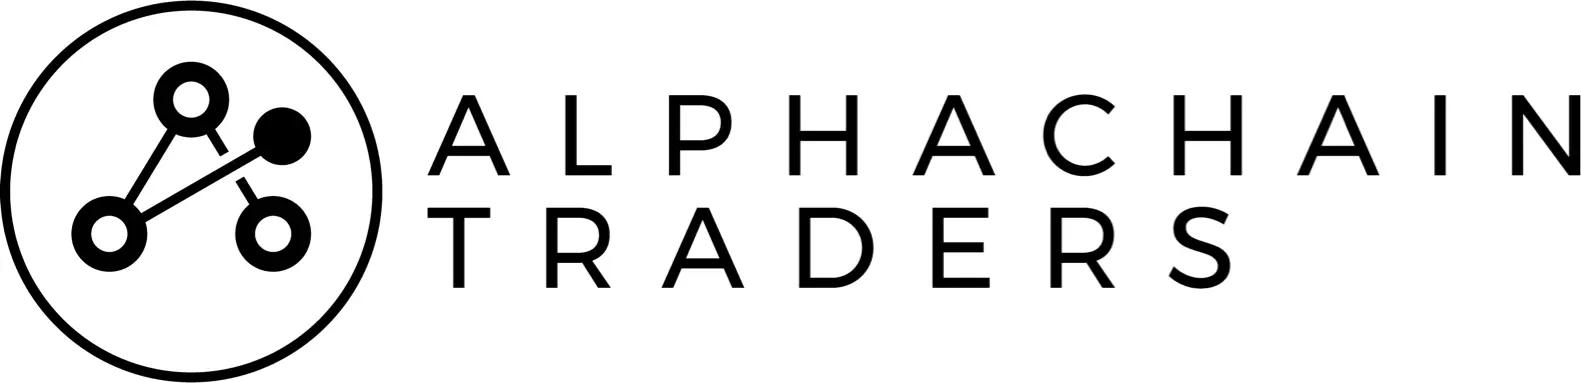 Alphachain Traders